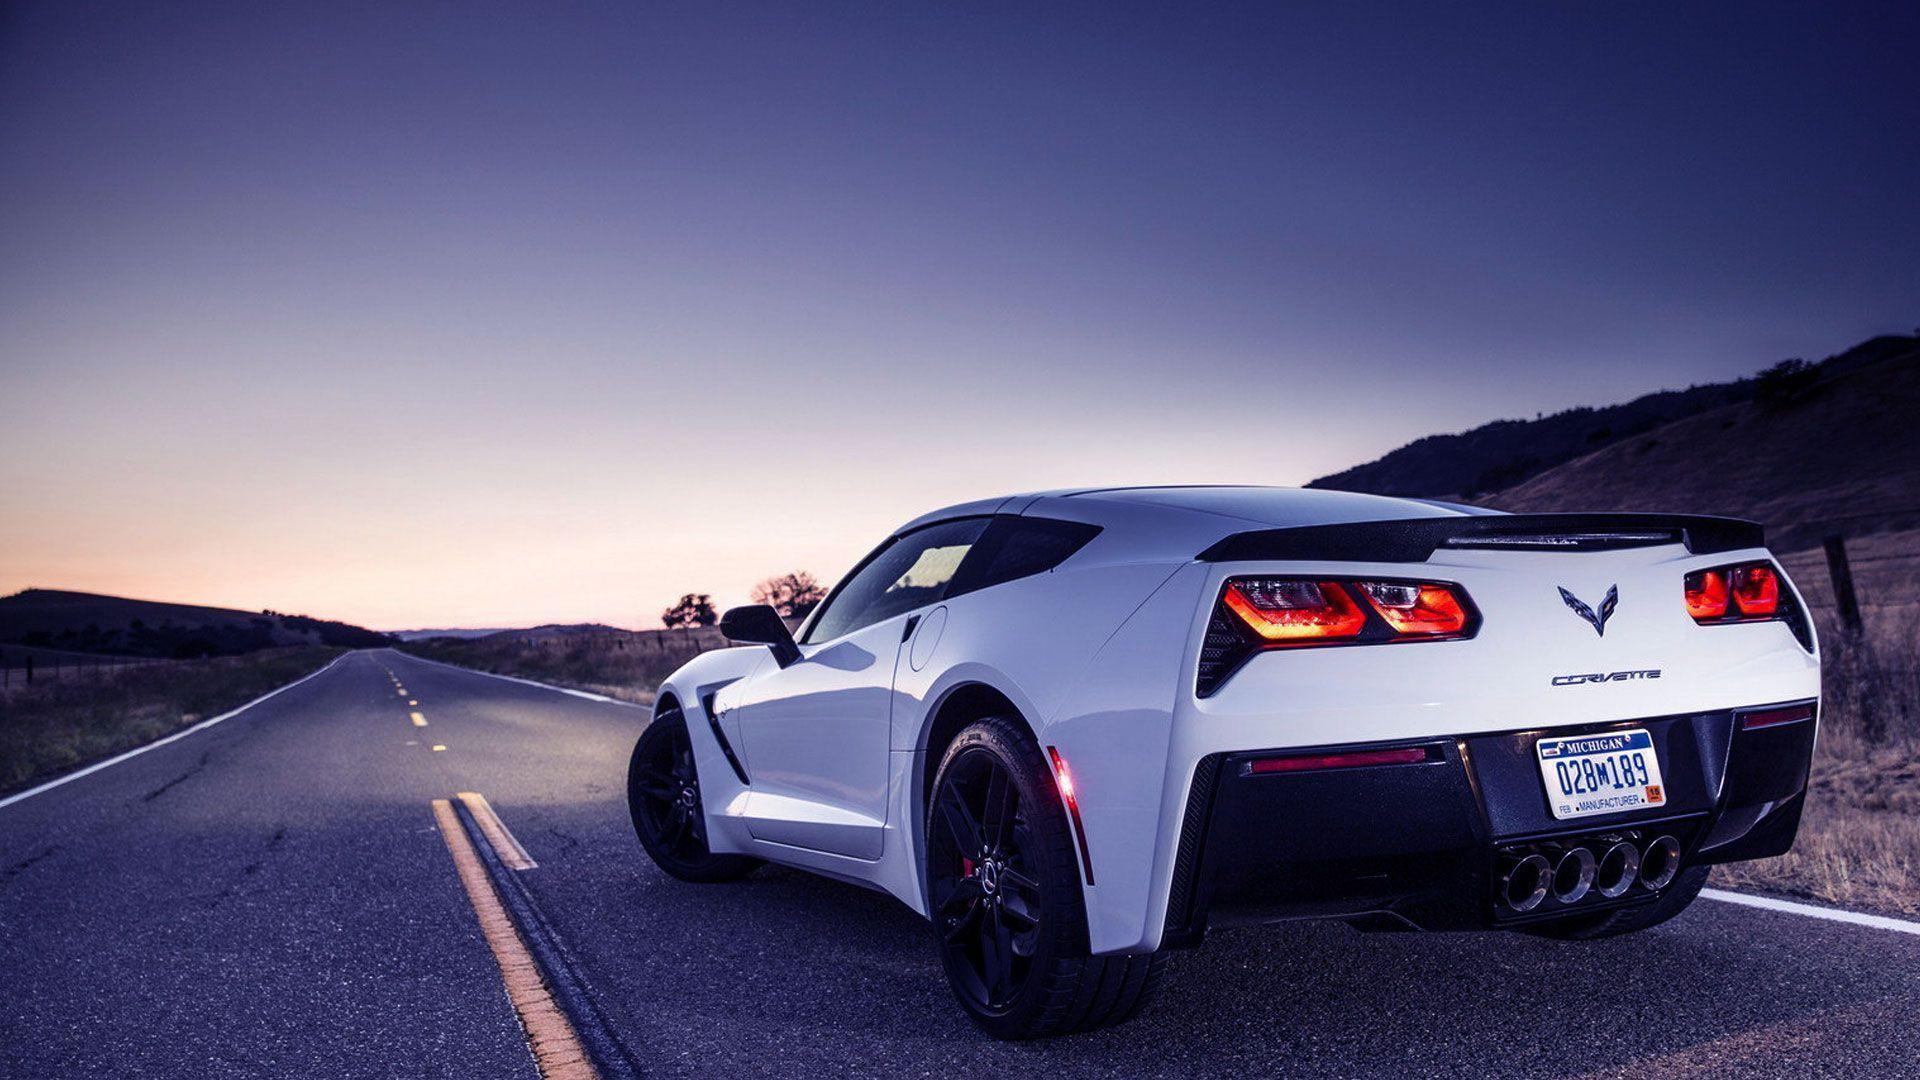 Corvette Background